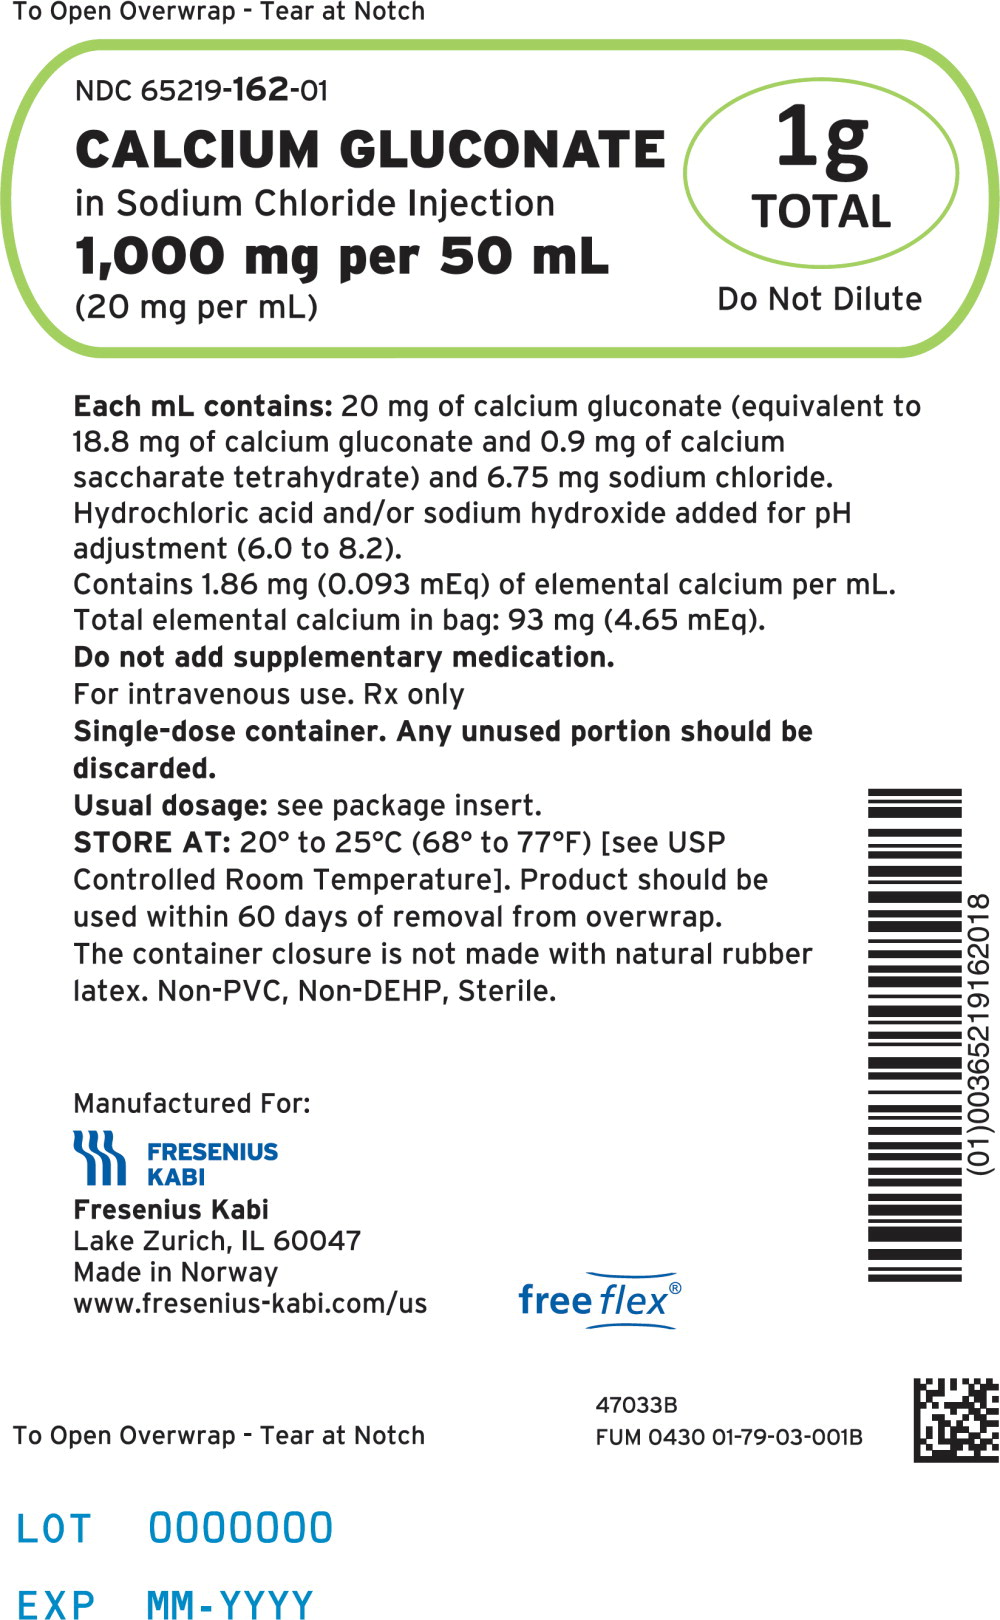 PACKAGE LABEL - PRINCIPAL DISPLAY – Calcium Gluconate 1 g Overwrap Label
